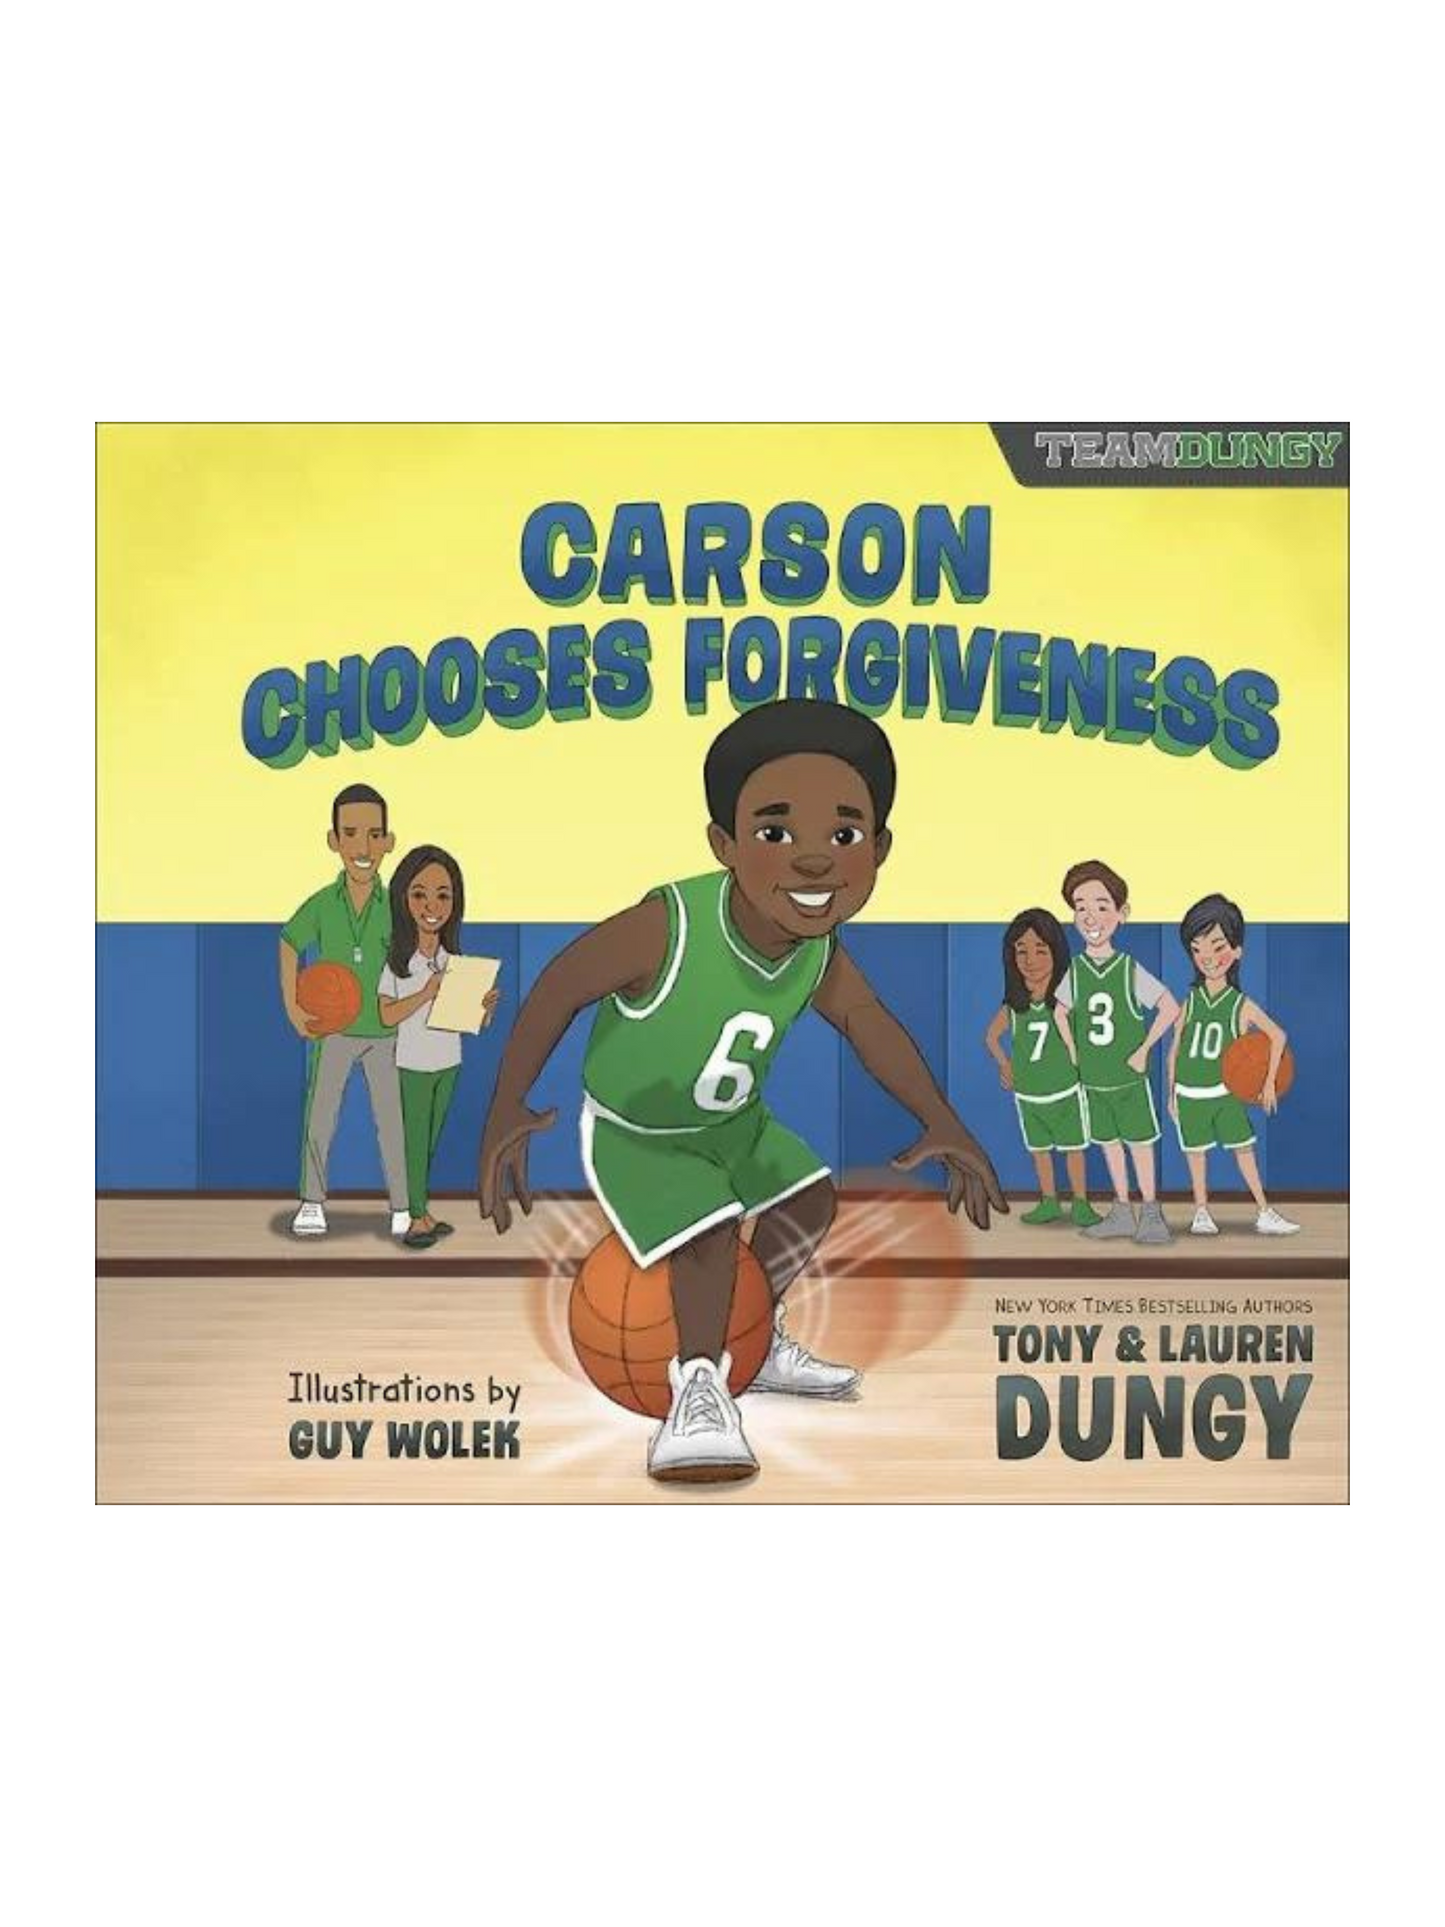 CARSON CHOOSES FORGIVENESS CHILDREN'S BOOK - THE LITTLE EAGLE BOUTIQUE